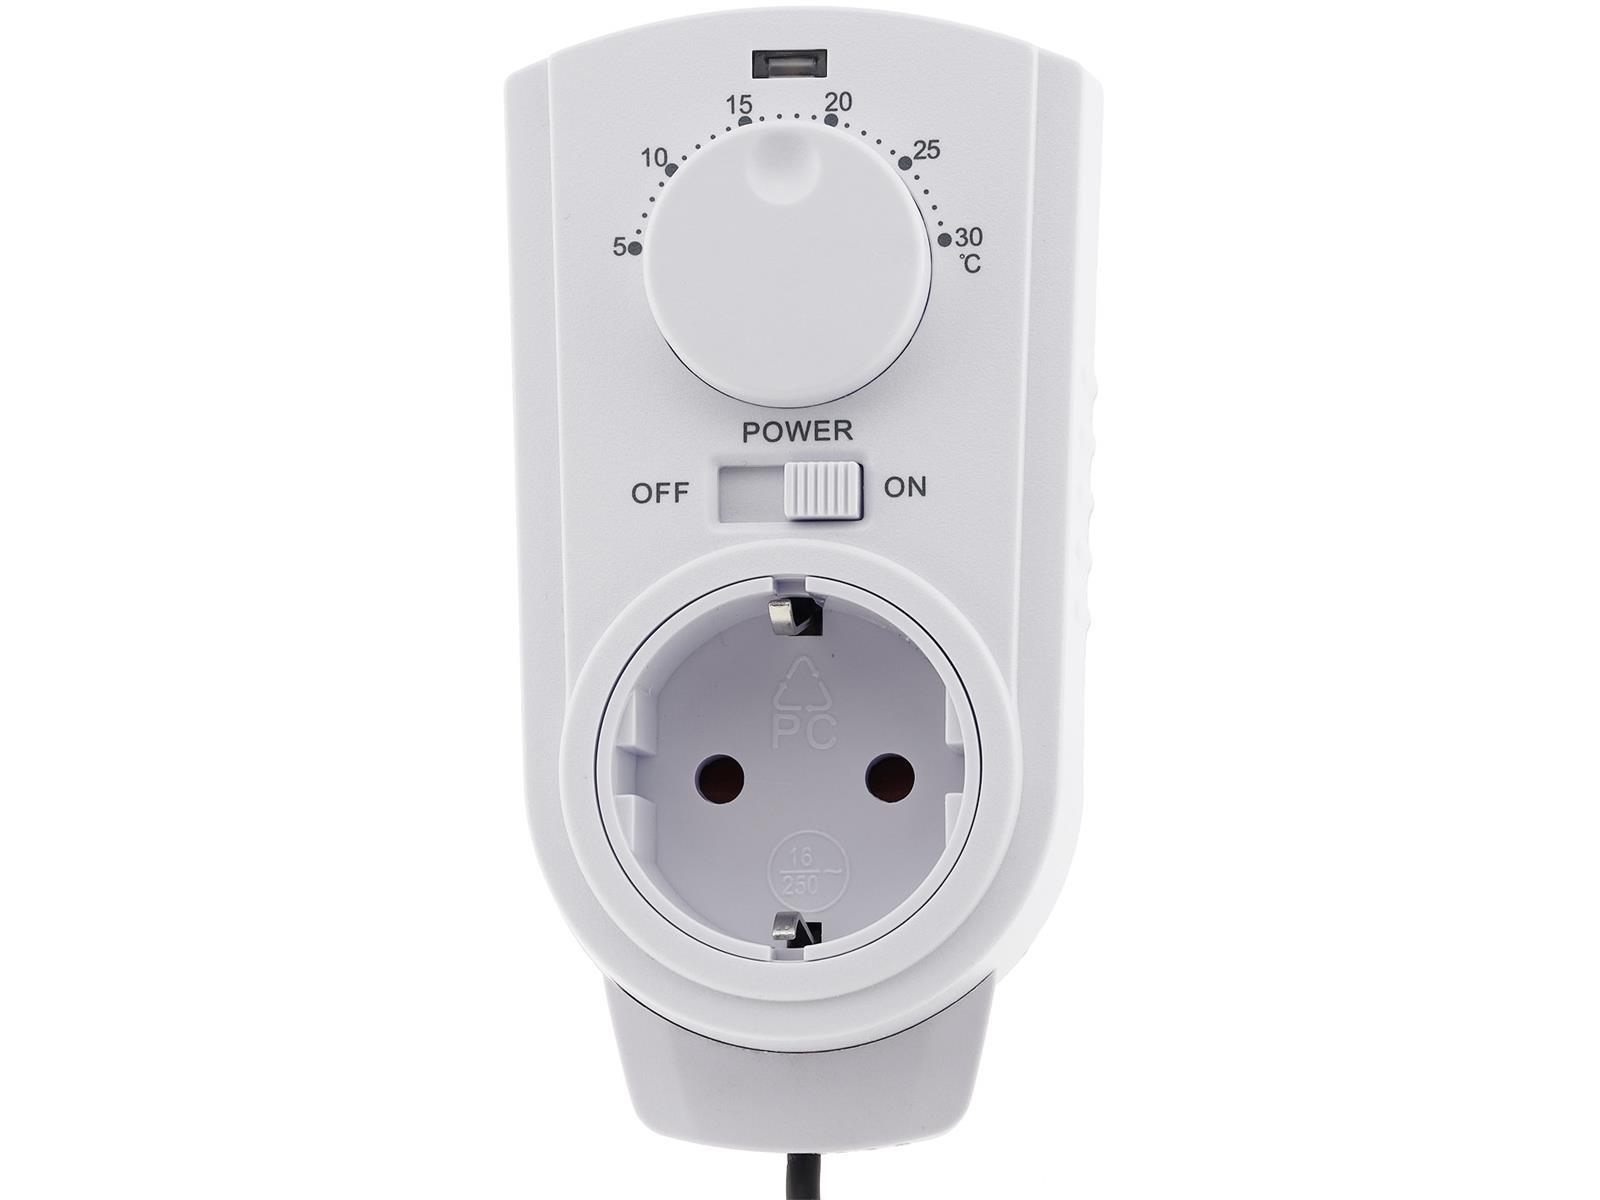 Steckdosen-Thermostat "ST-50" ana EXT5-30°C, 230V, 2m Kabel + Außenfühler